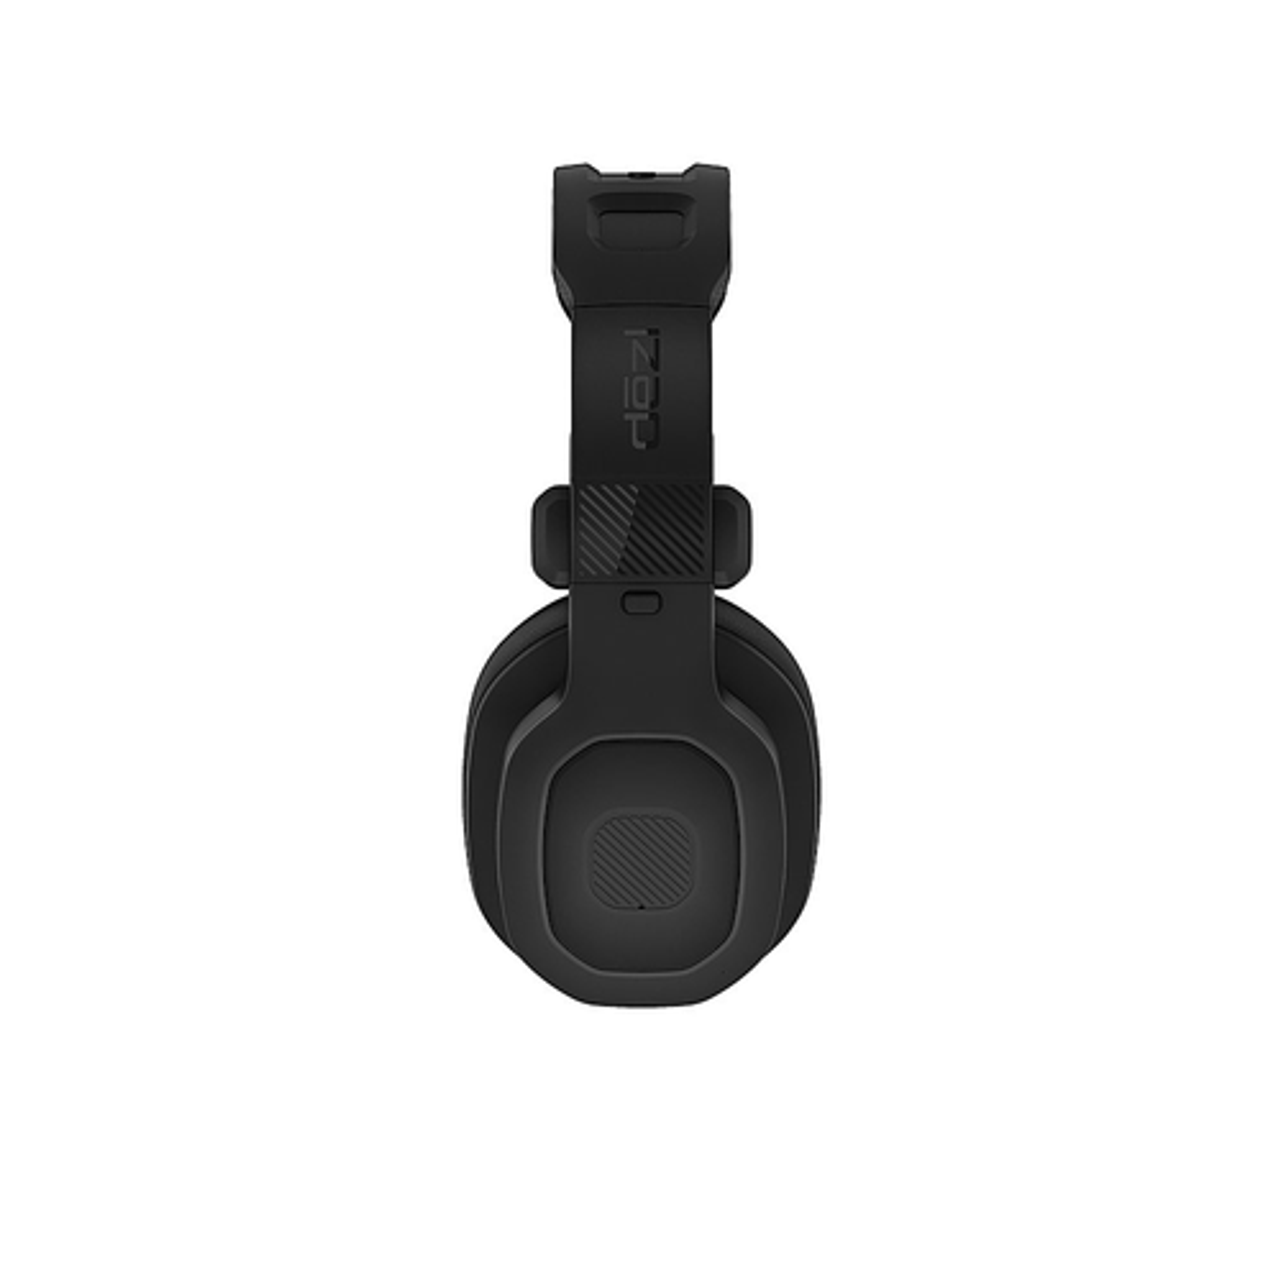 Garmin - dezl 200 Bluetooth Over-the-Ear Headset - Black